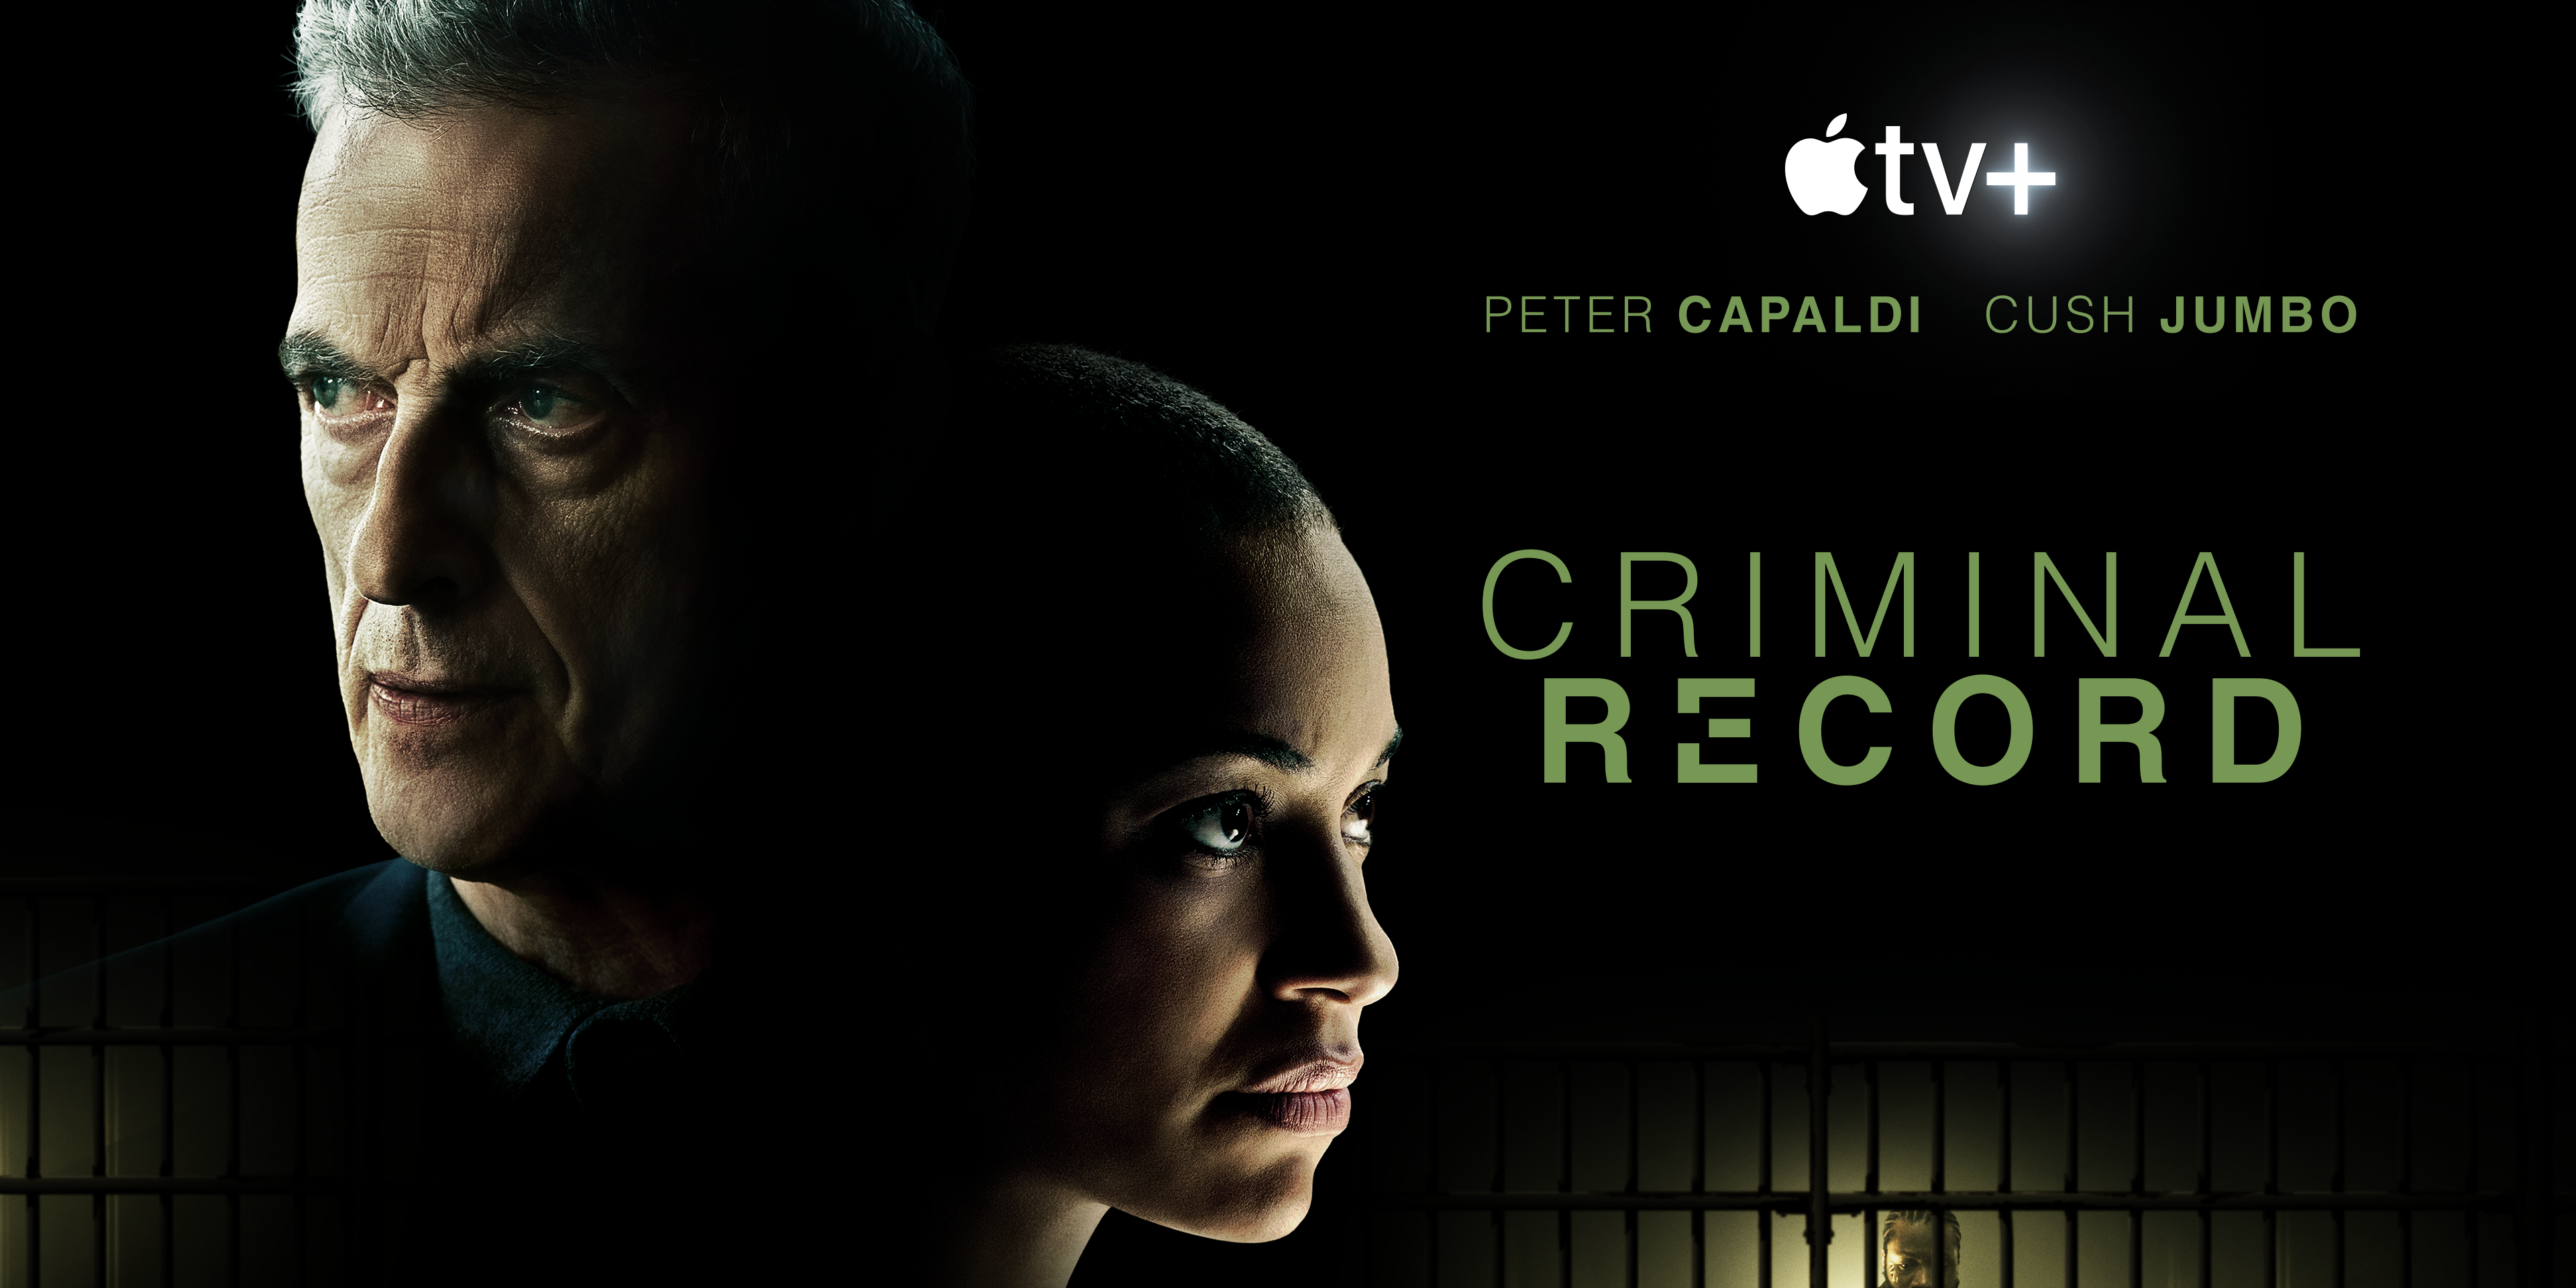 Capaldi and Jumbo on the key art for Criminal Record